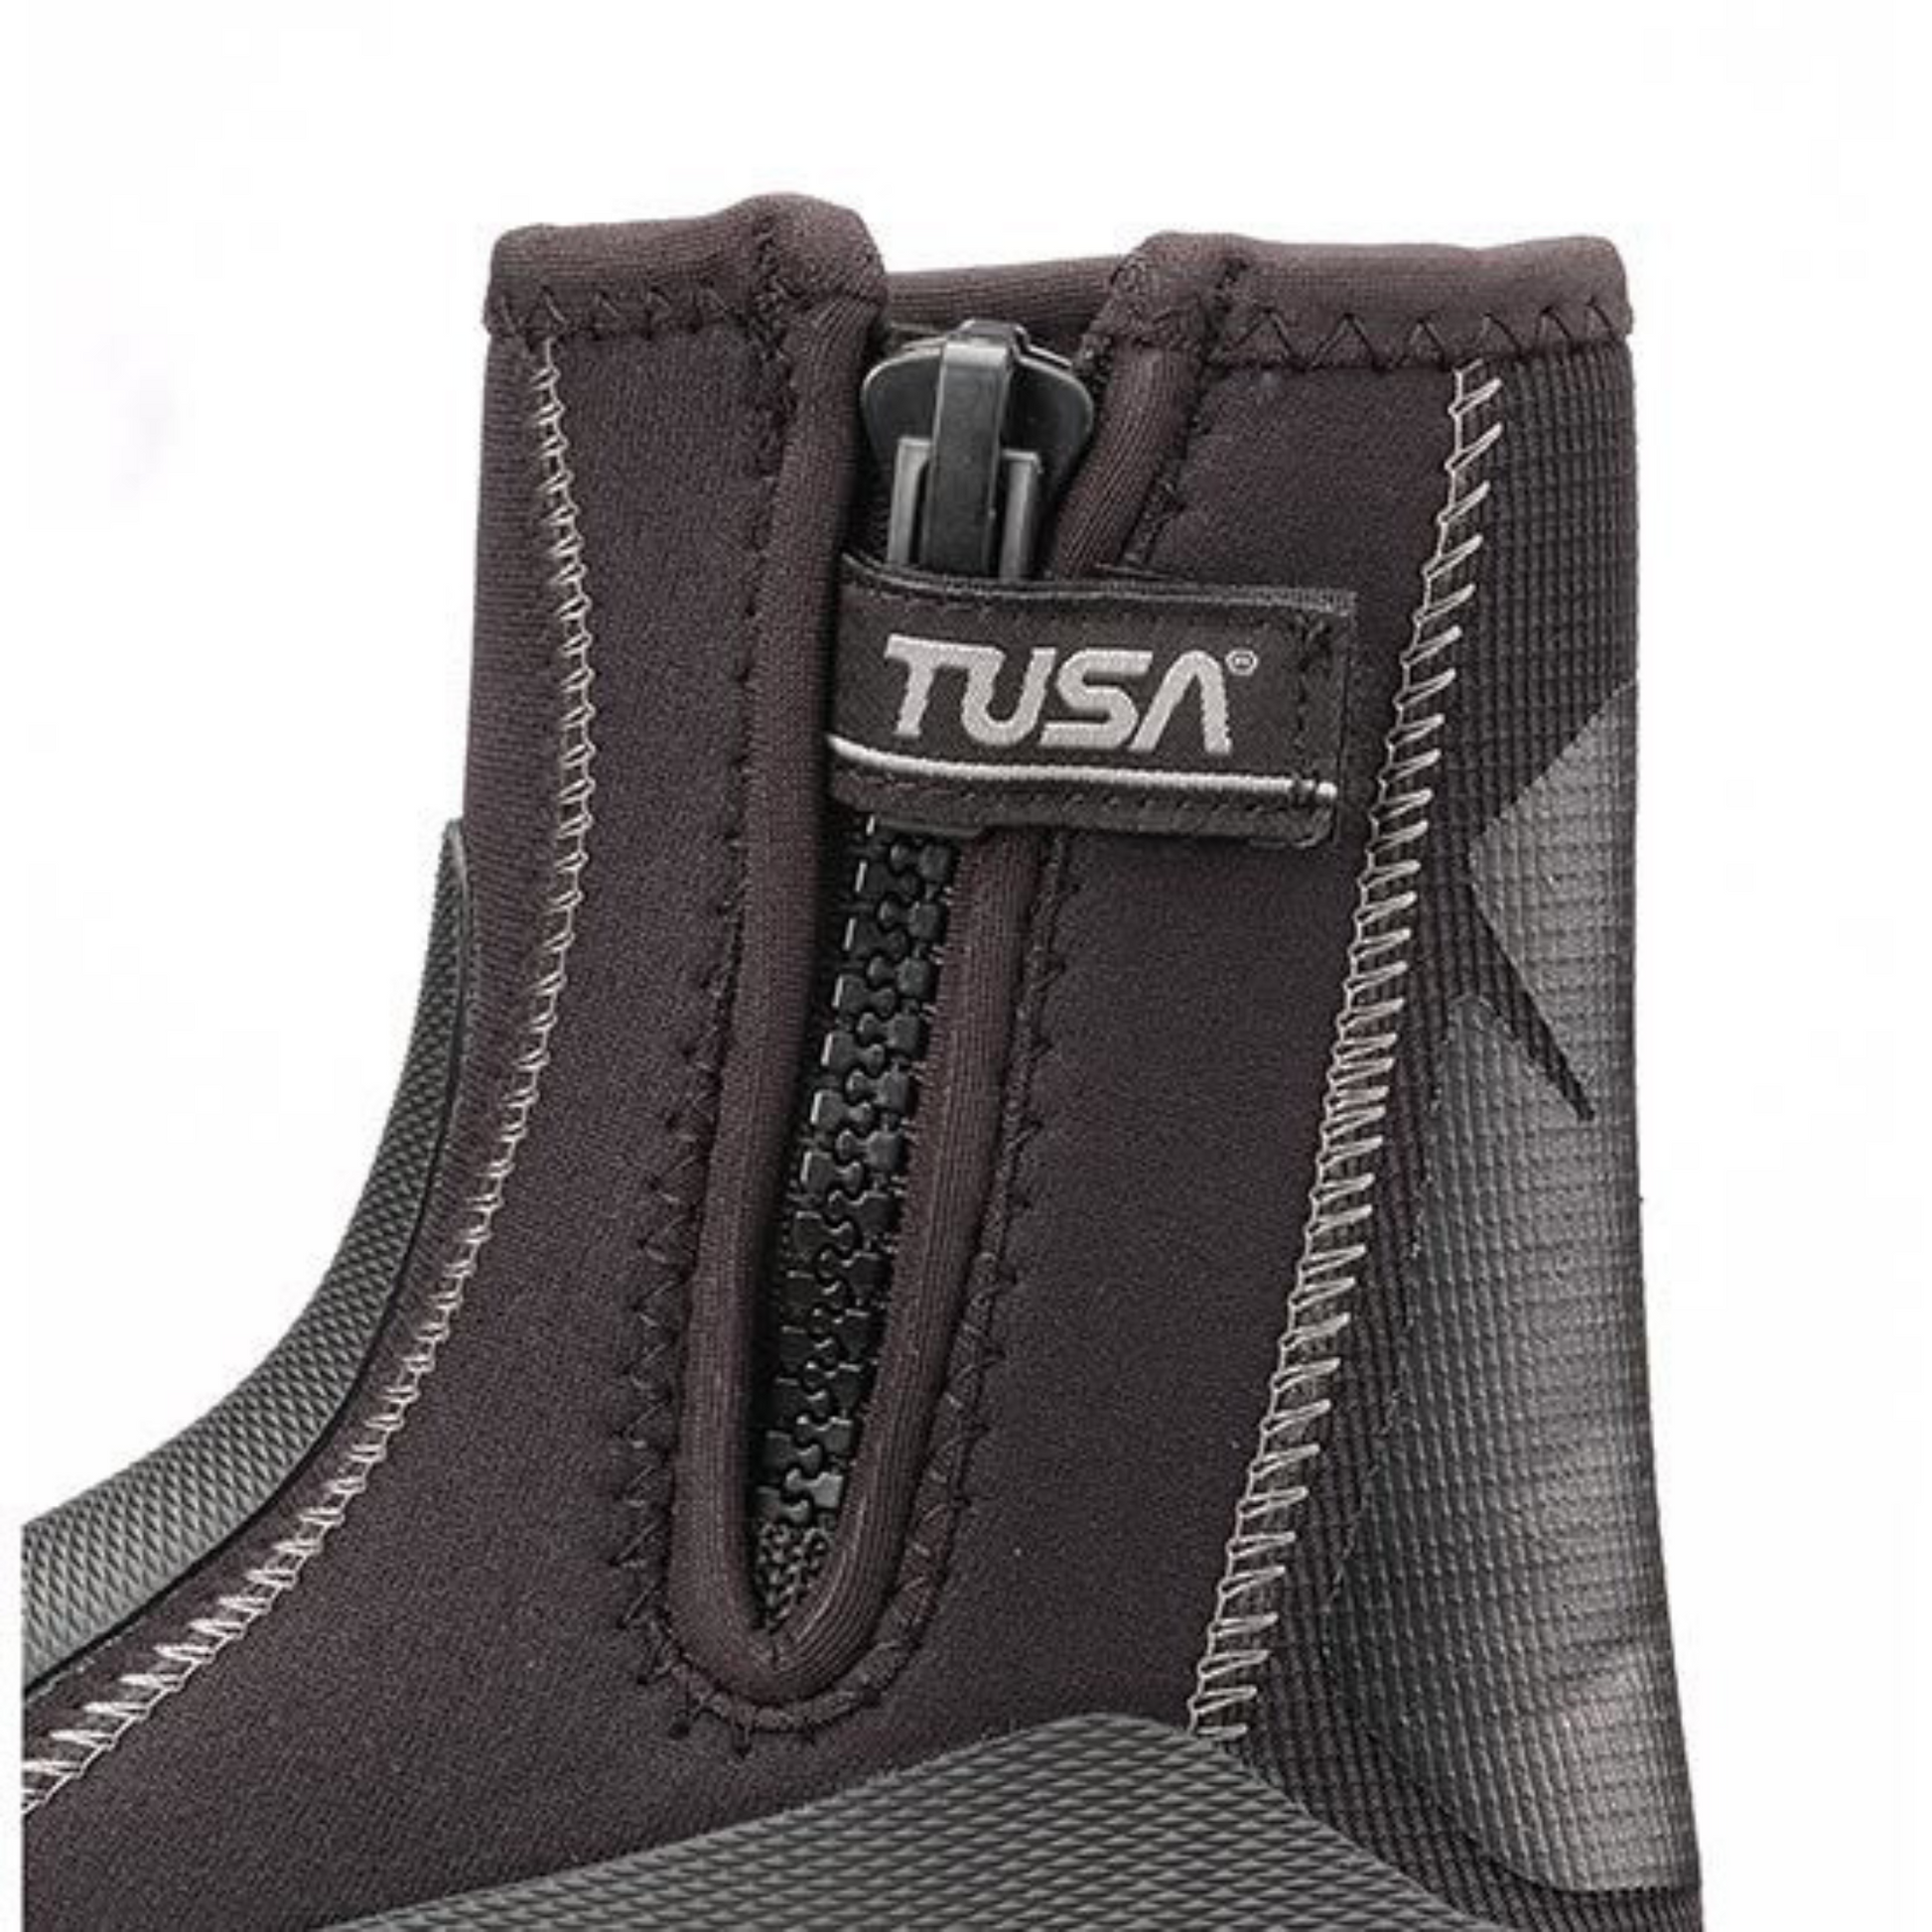 TUSA Hard Sole 5mm Dive Boot